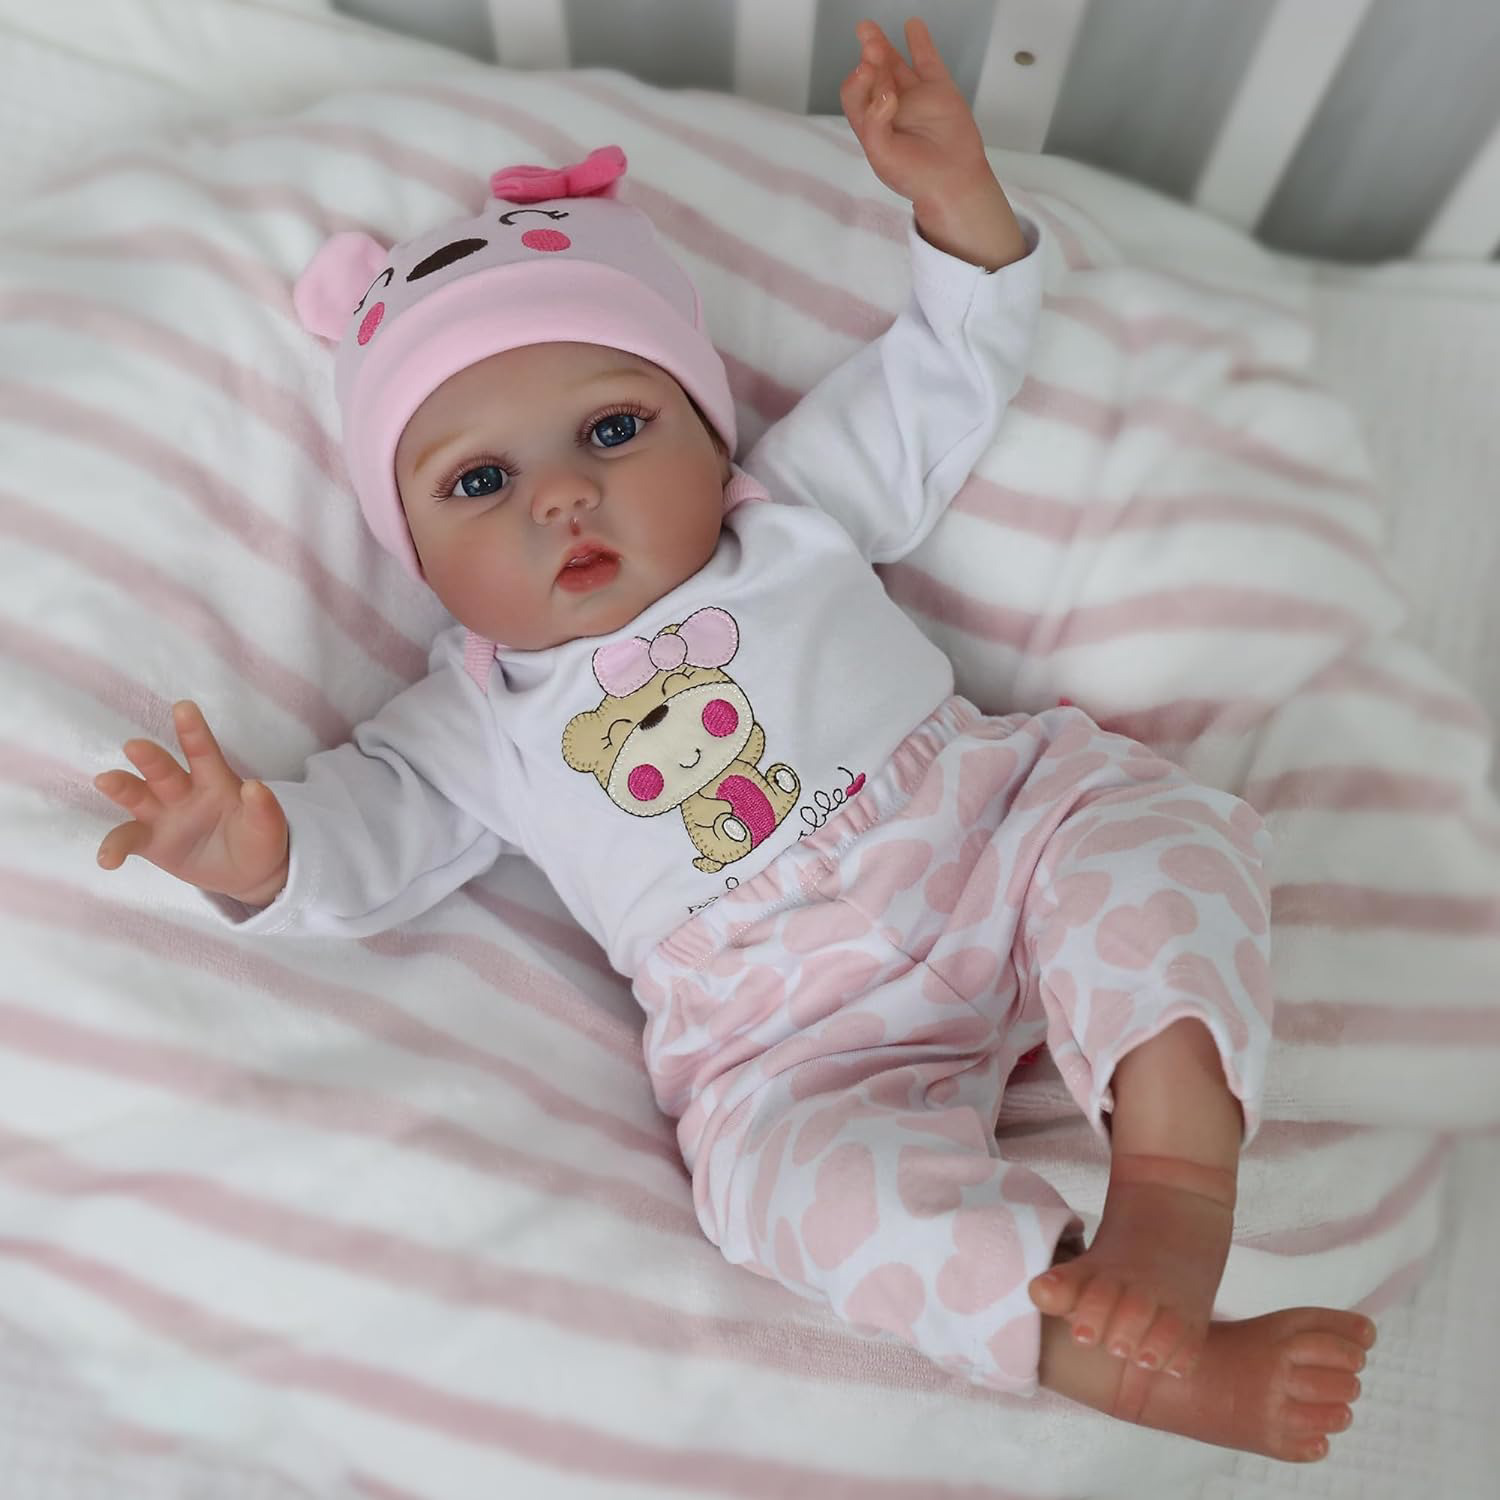 CHAREX Reborn Baby Dolls Lucy, 22 inch Realistic Reborn Girl Doll, Lifelike Baby